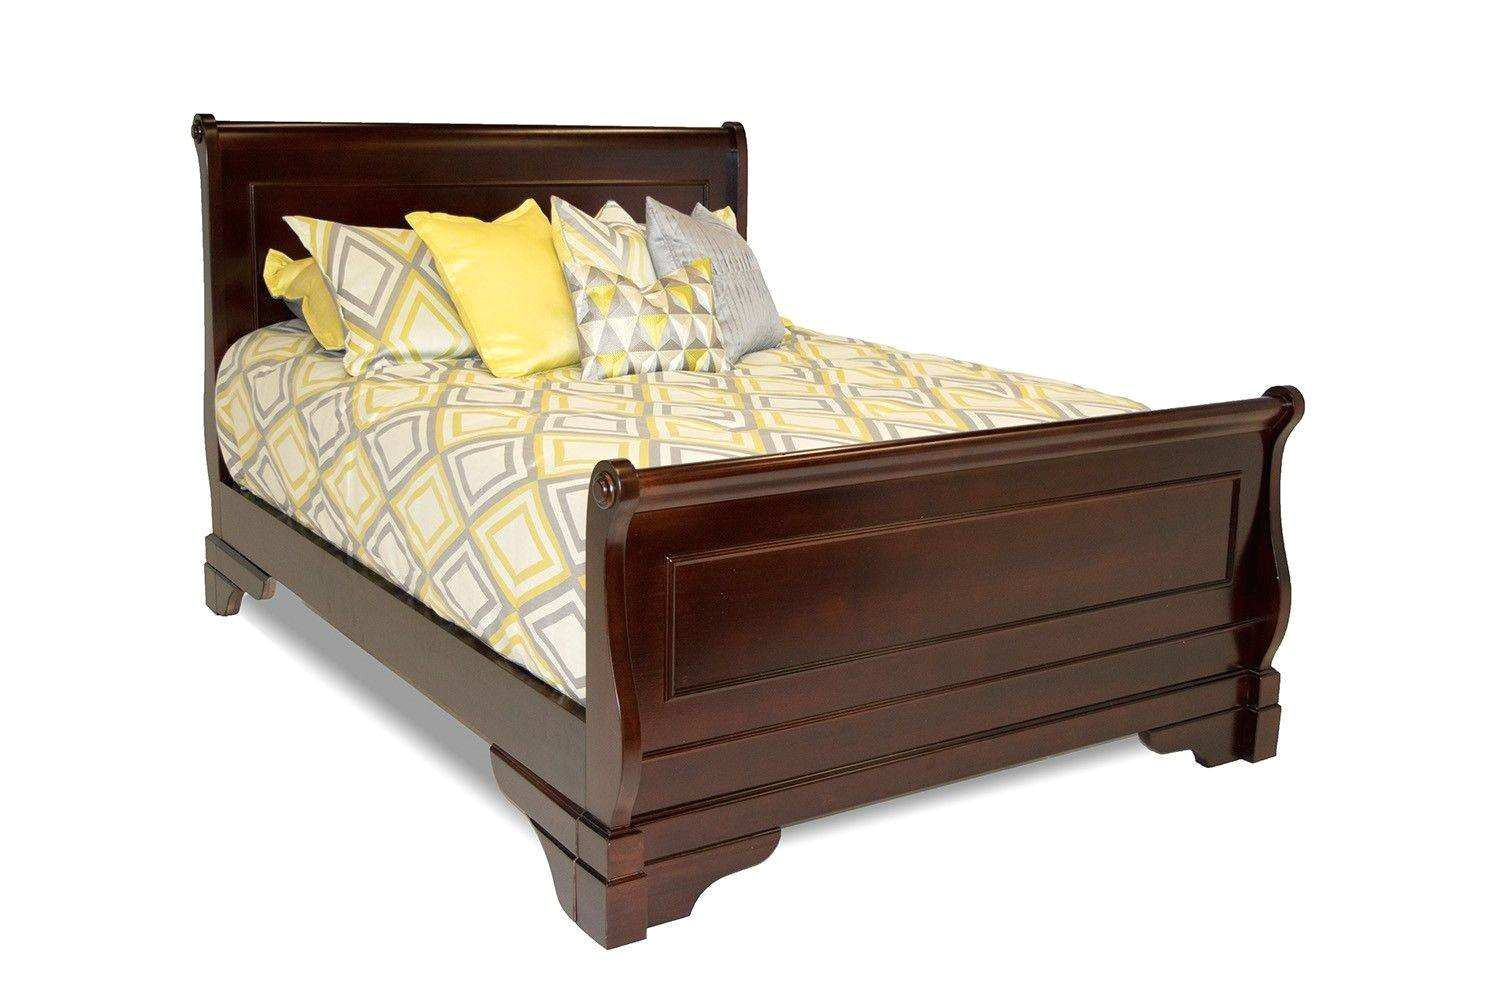 eastern king bed frame lovely cal king bedroom furniture set lovely versailles cal king bed in